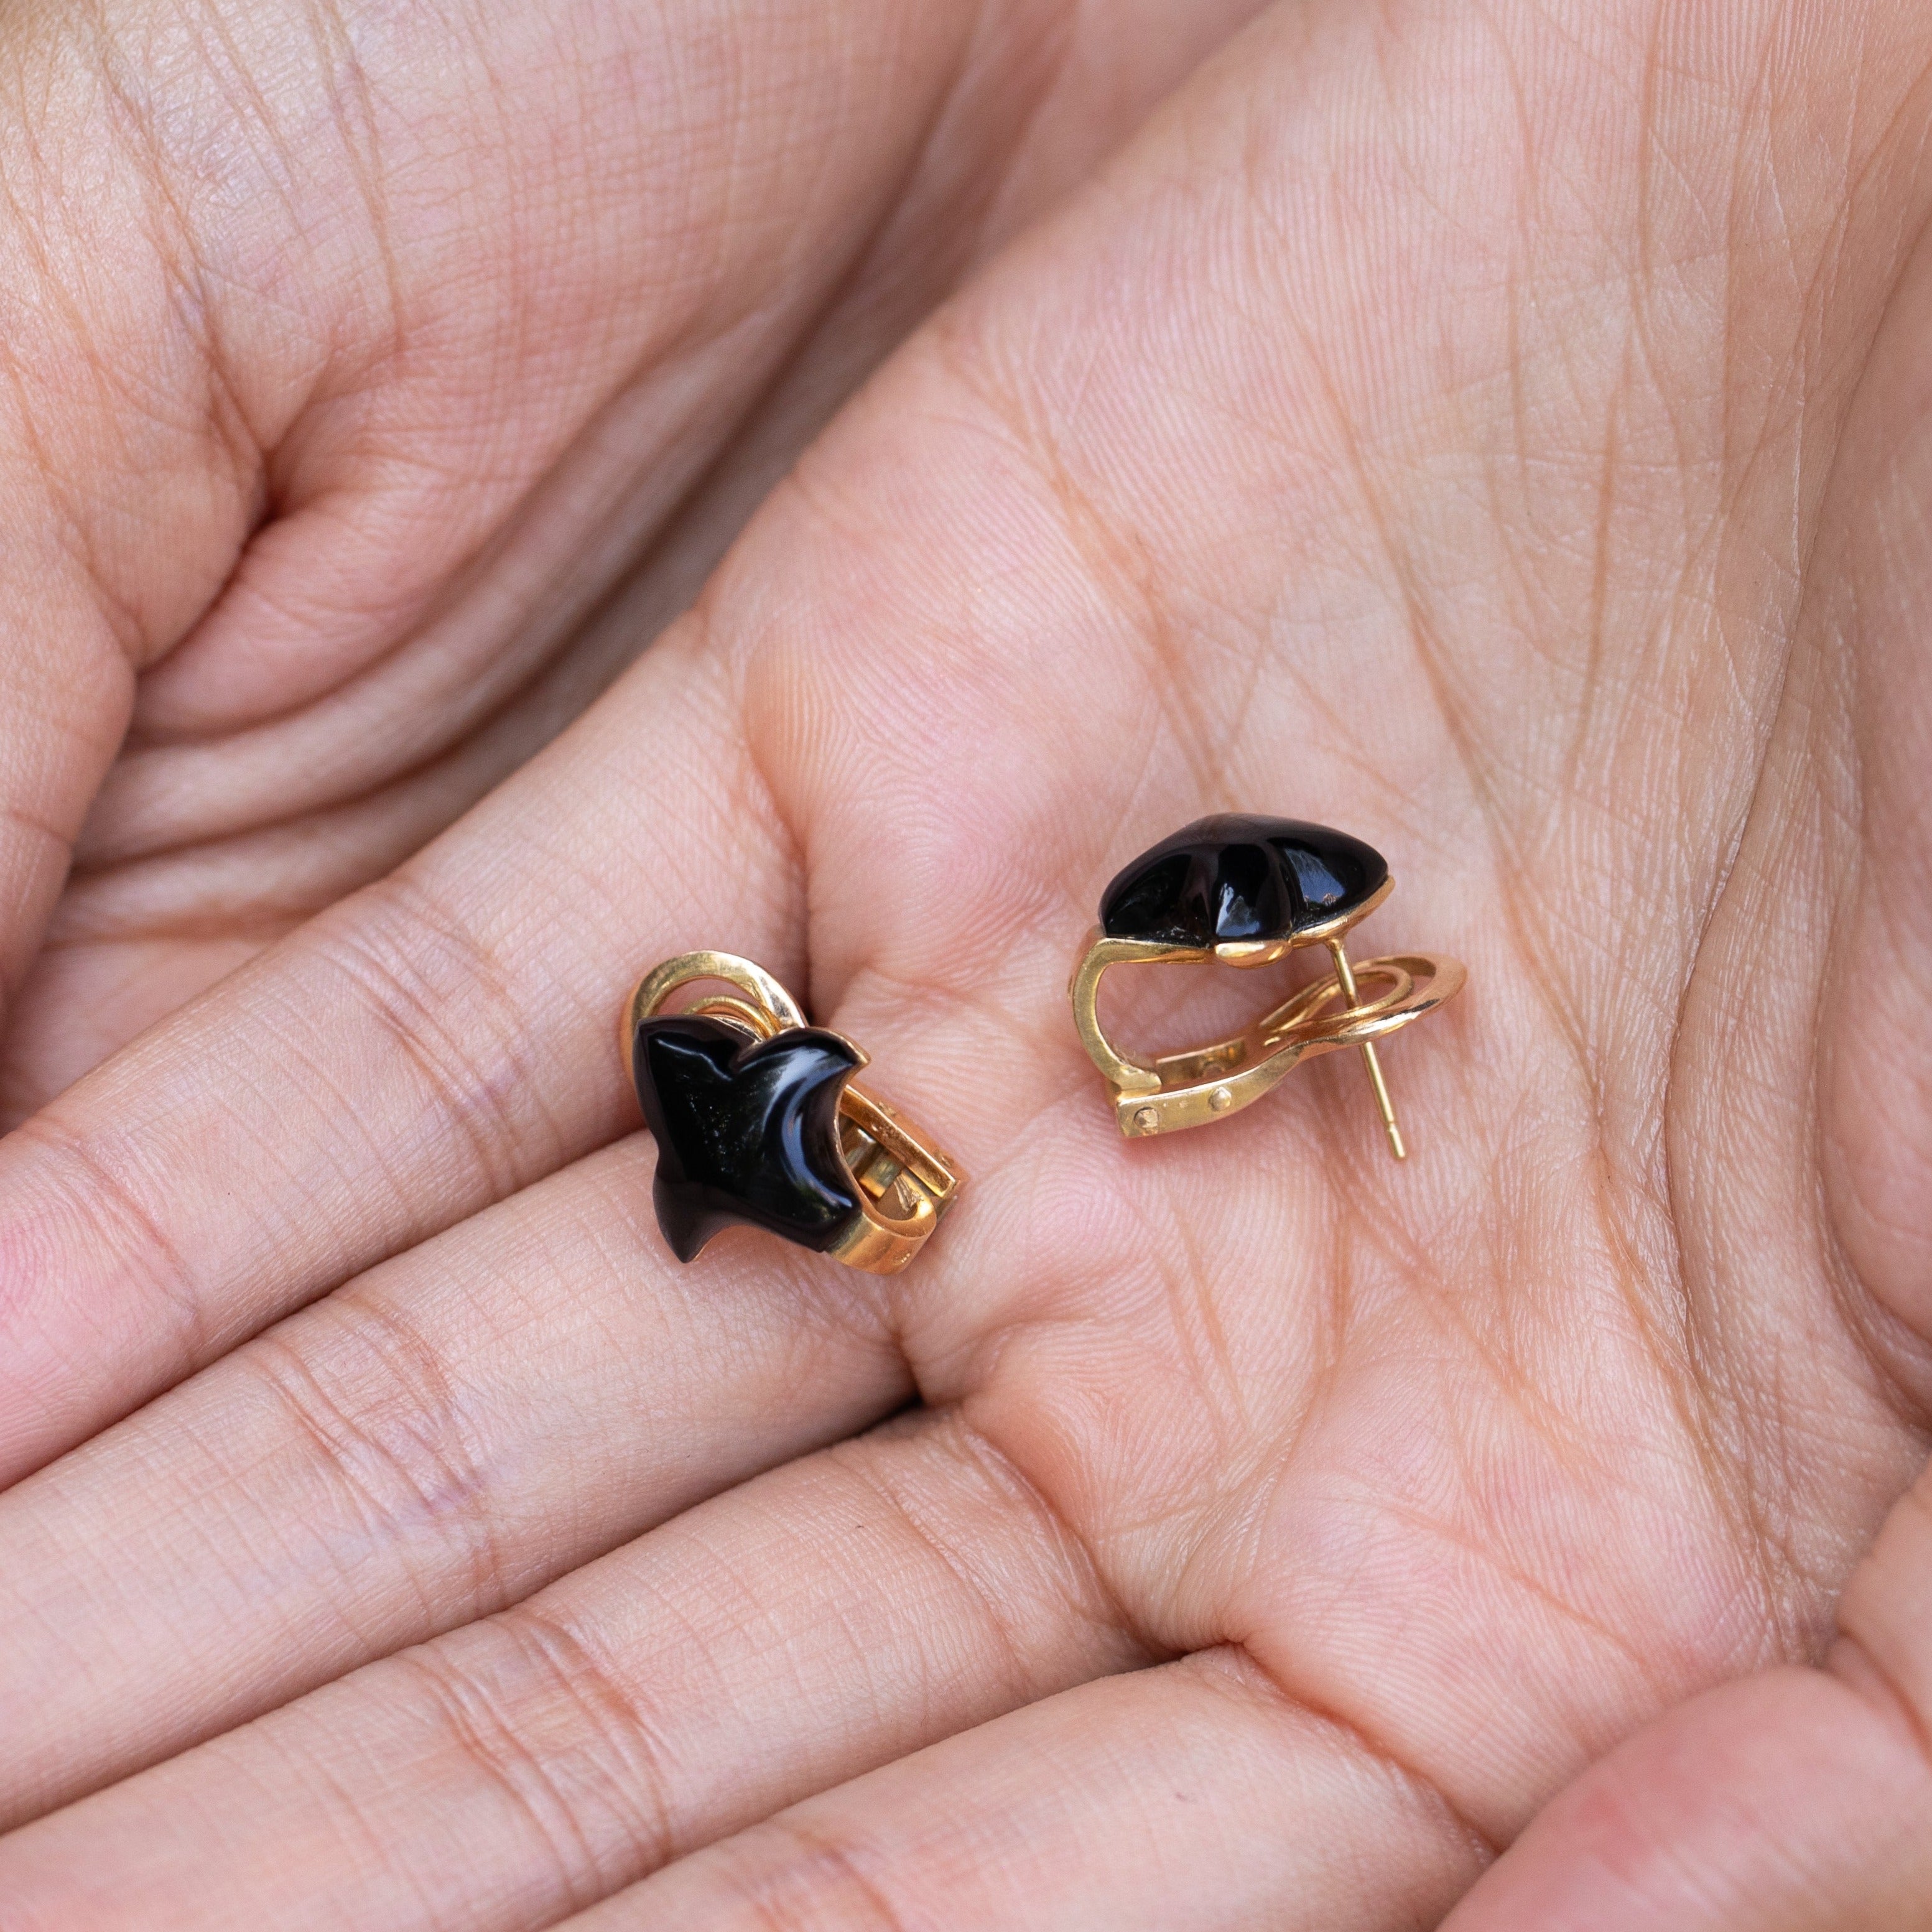 French Onyx and 18K Gold Fleur-De-Lis Earrings